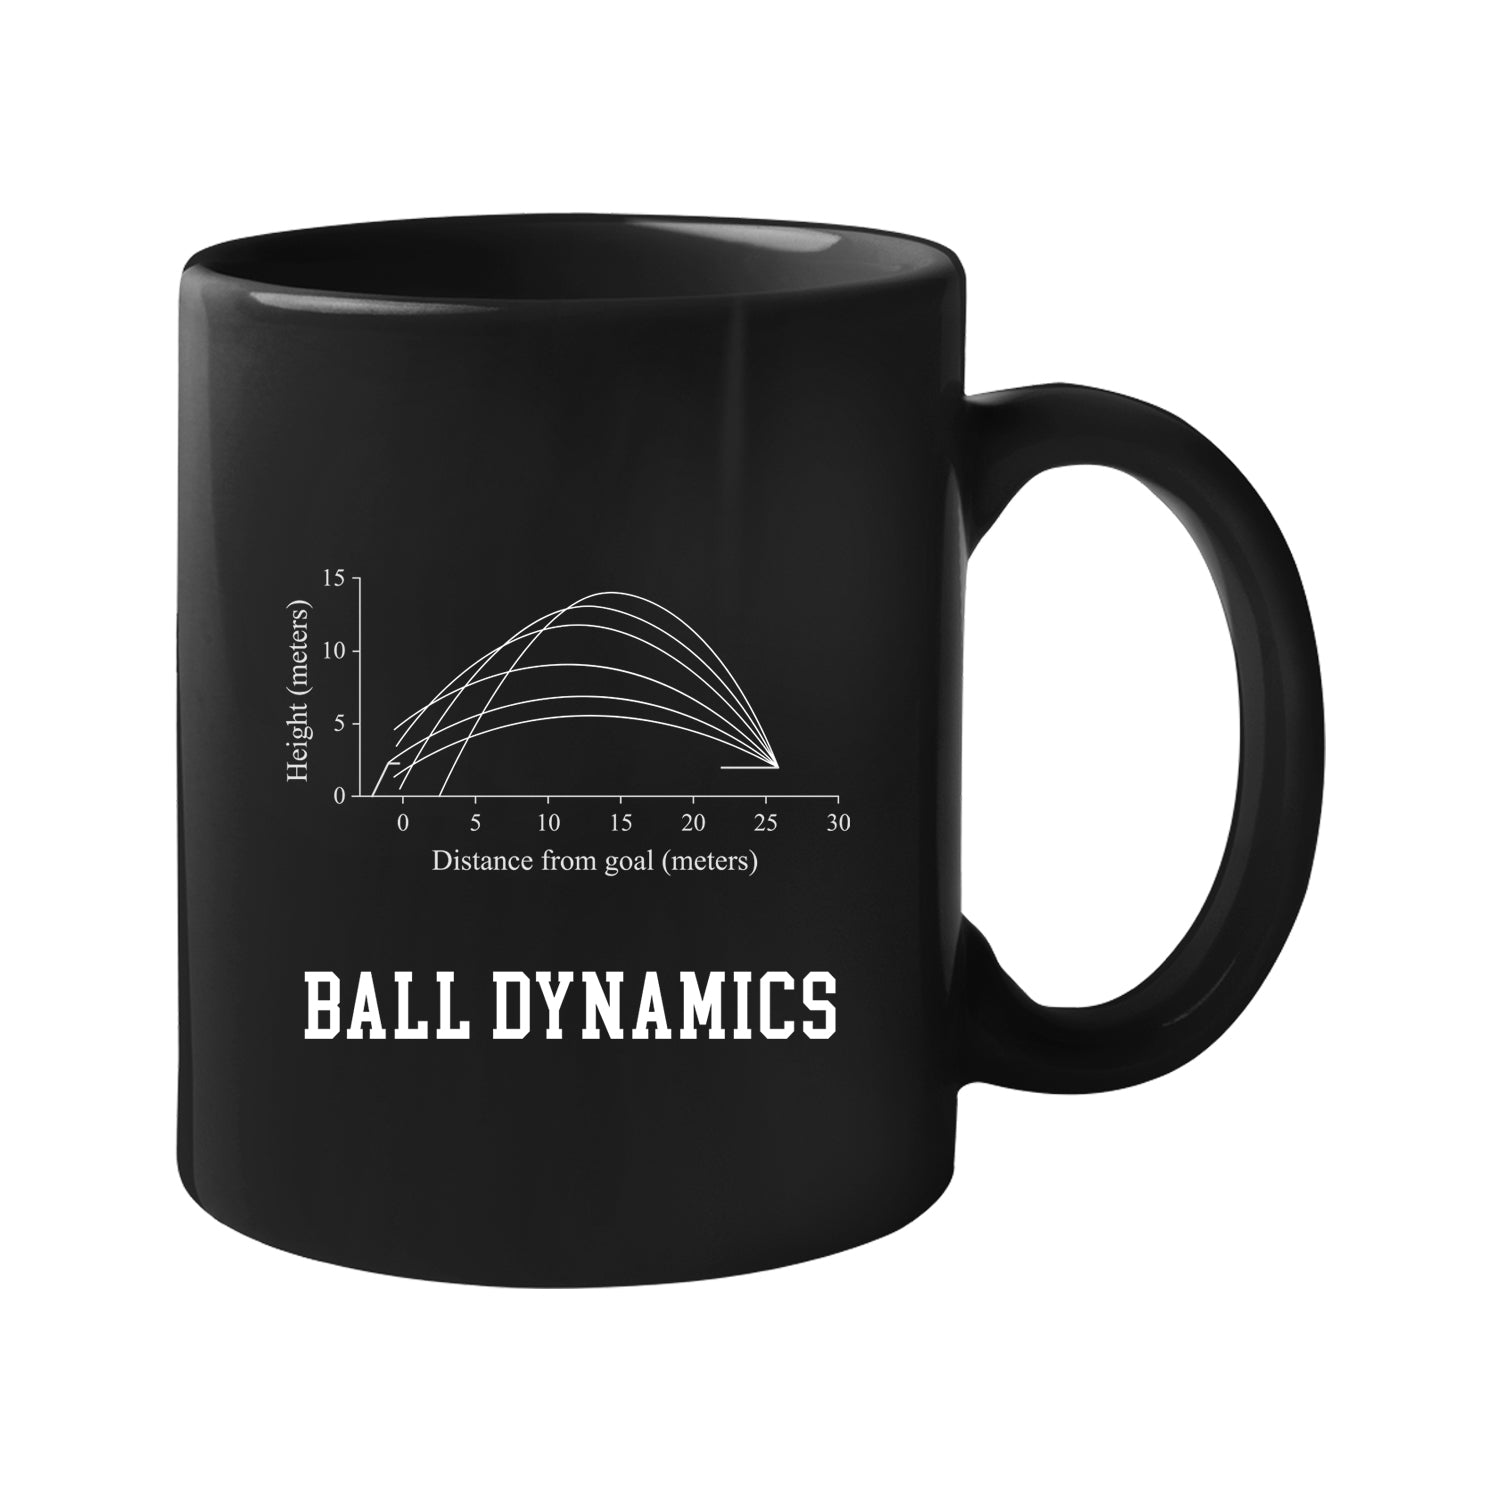 Ball Dynamics - Soccermatics - Mug 11 oz